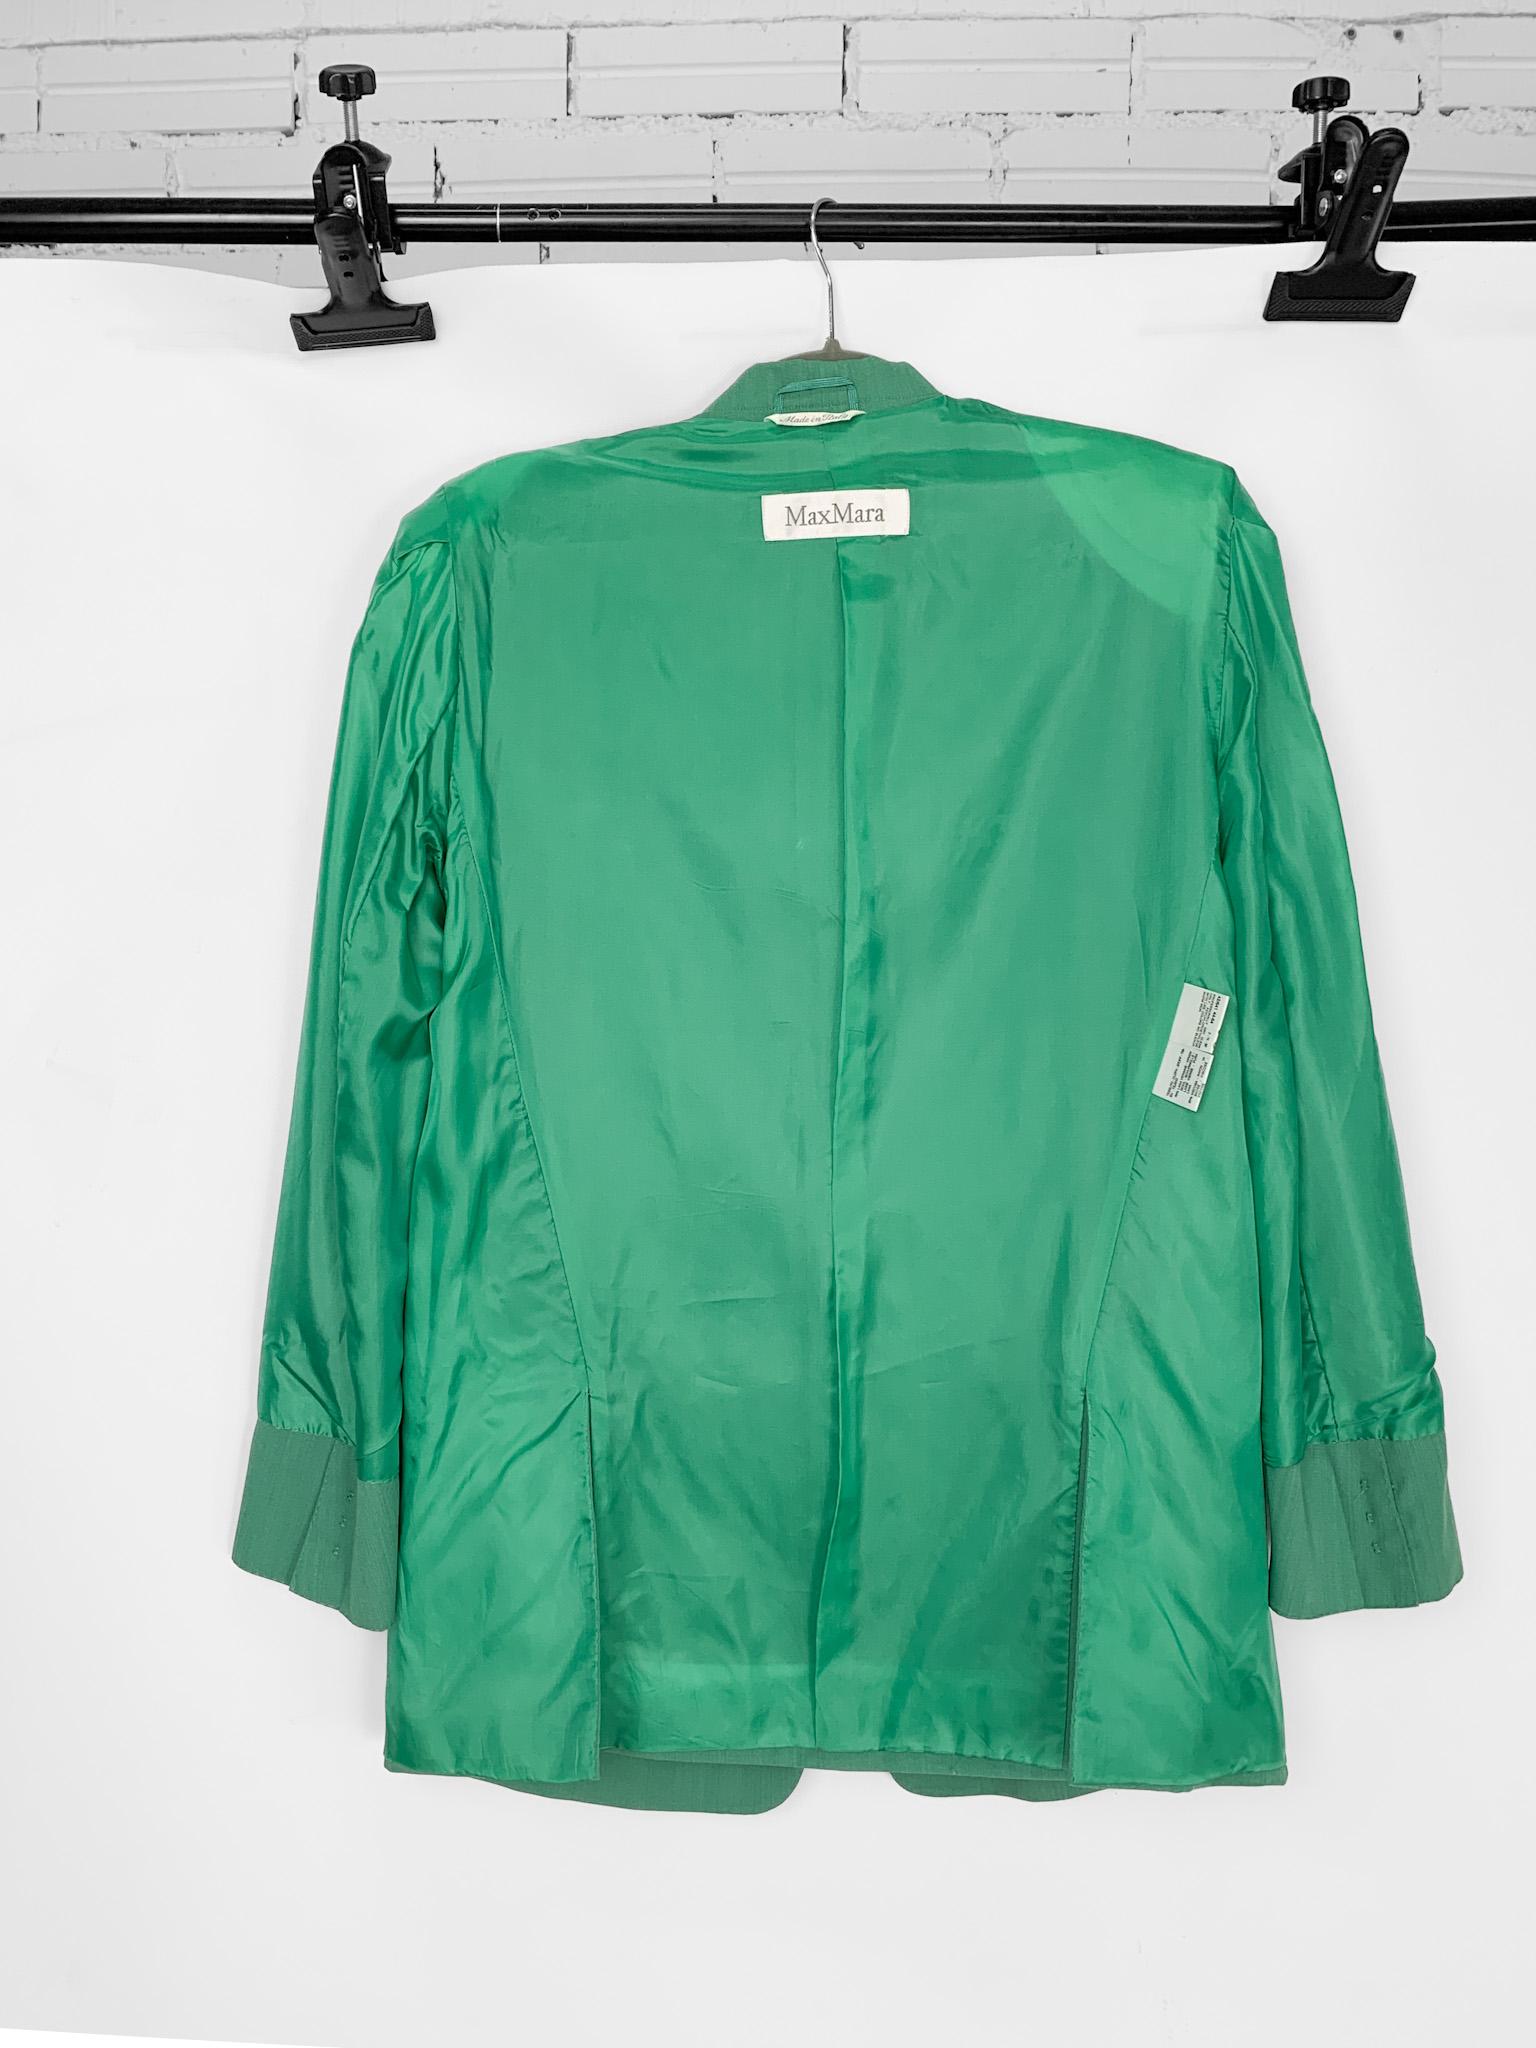 MaxMara solid colour mint green wool & silk trouser suit, trousers, blazer 10